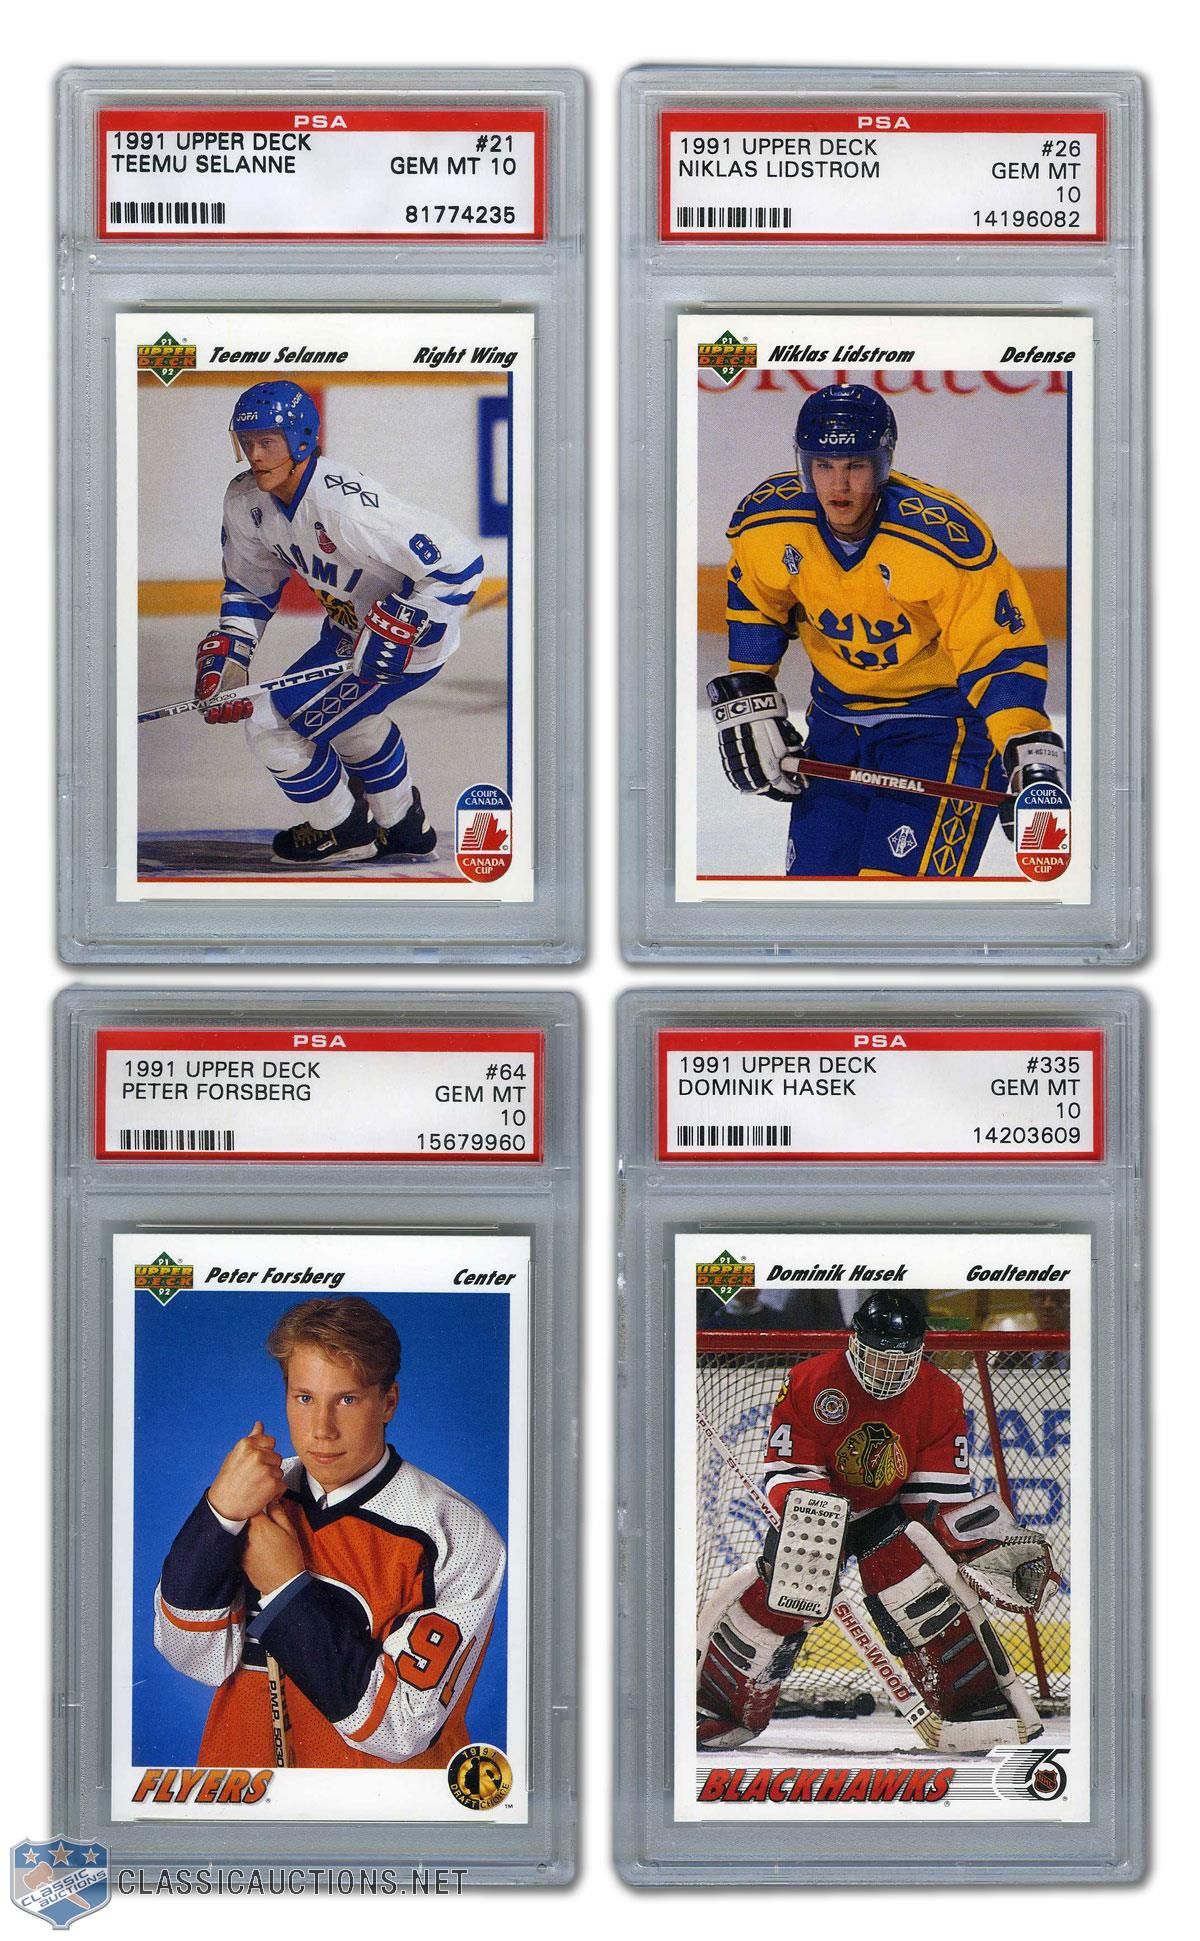  (CI) Teemu Selanne Hockey Card 1993-94 Upper Deck